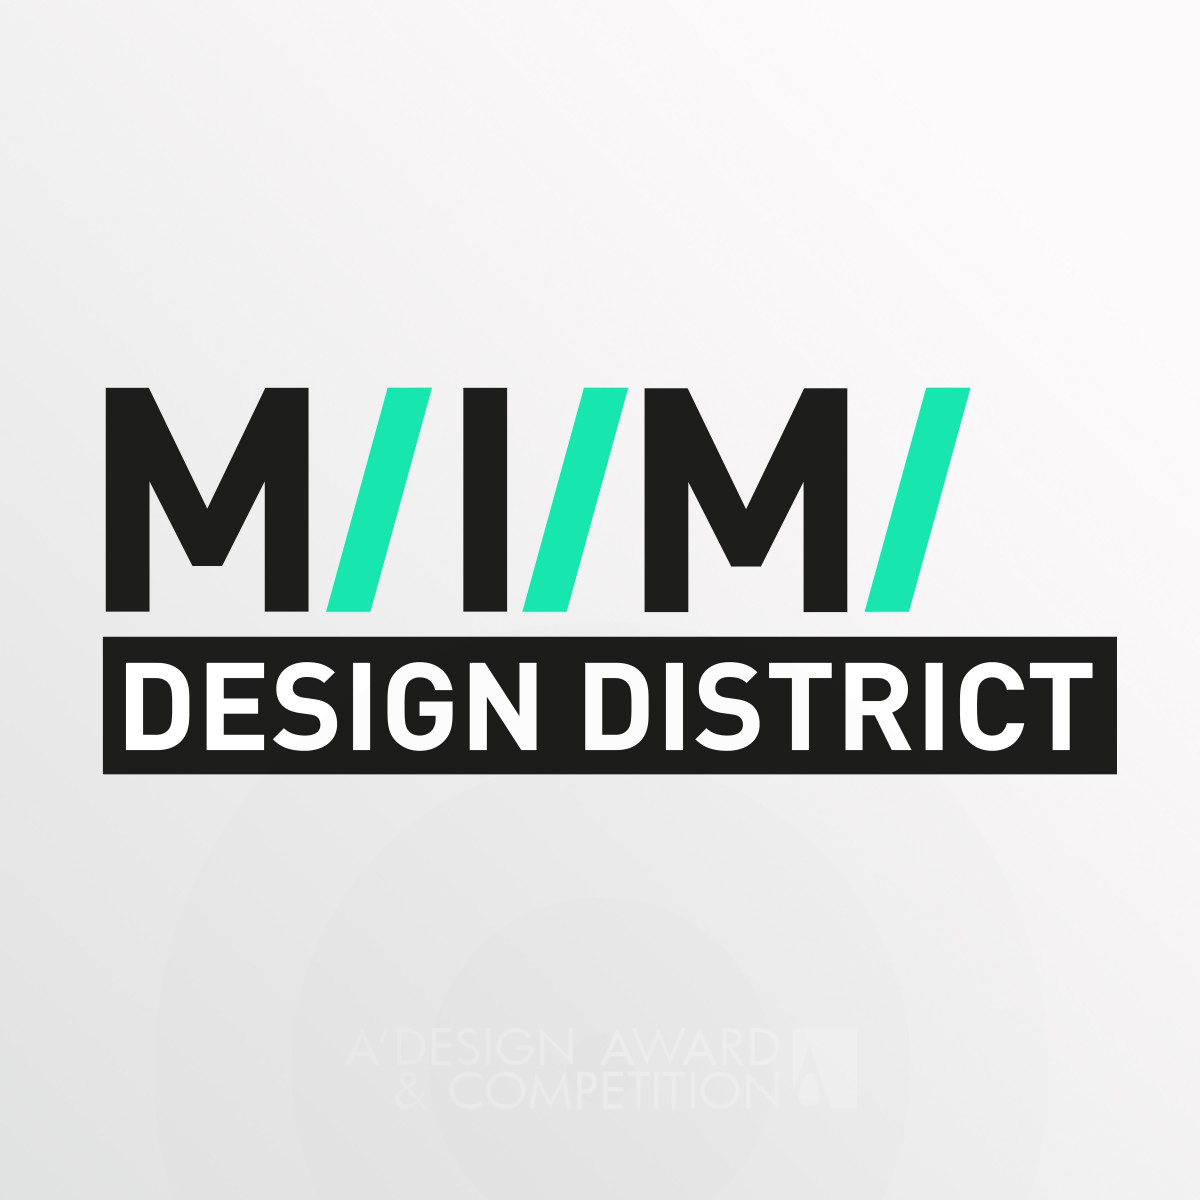 M/I/M/ Design District <b>Corporate Identity